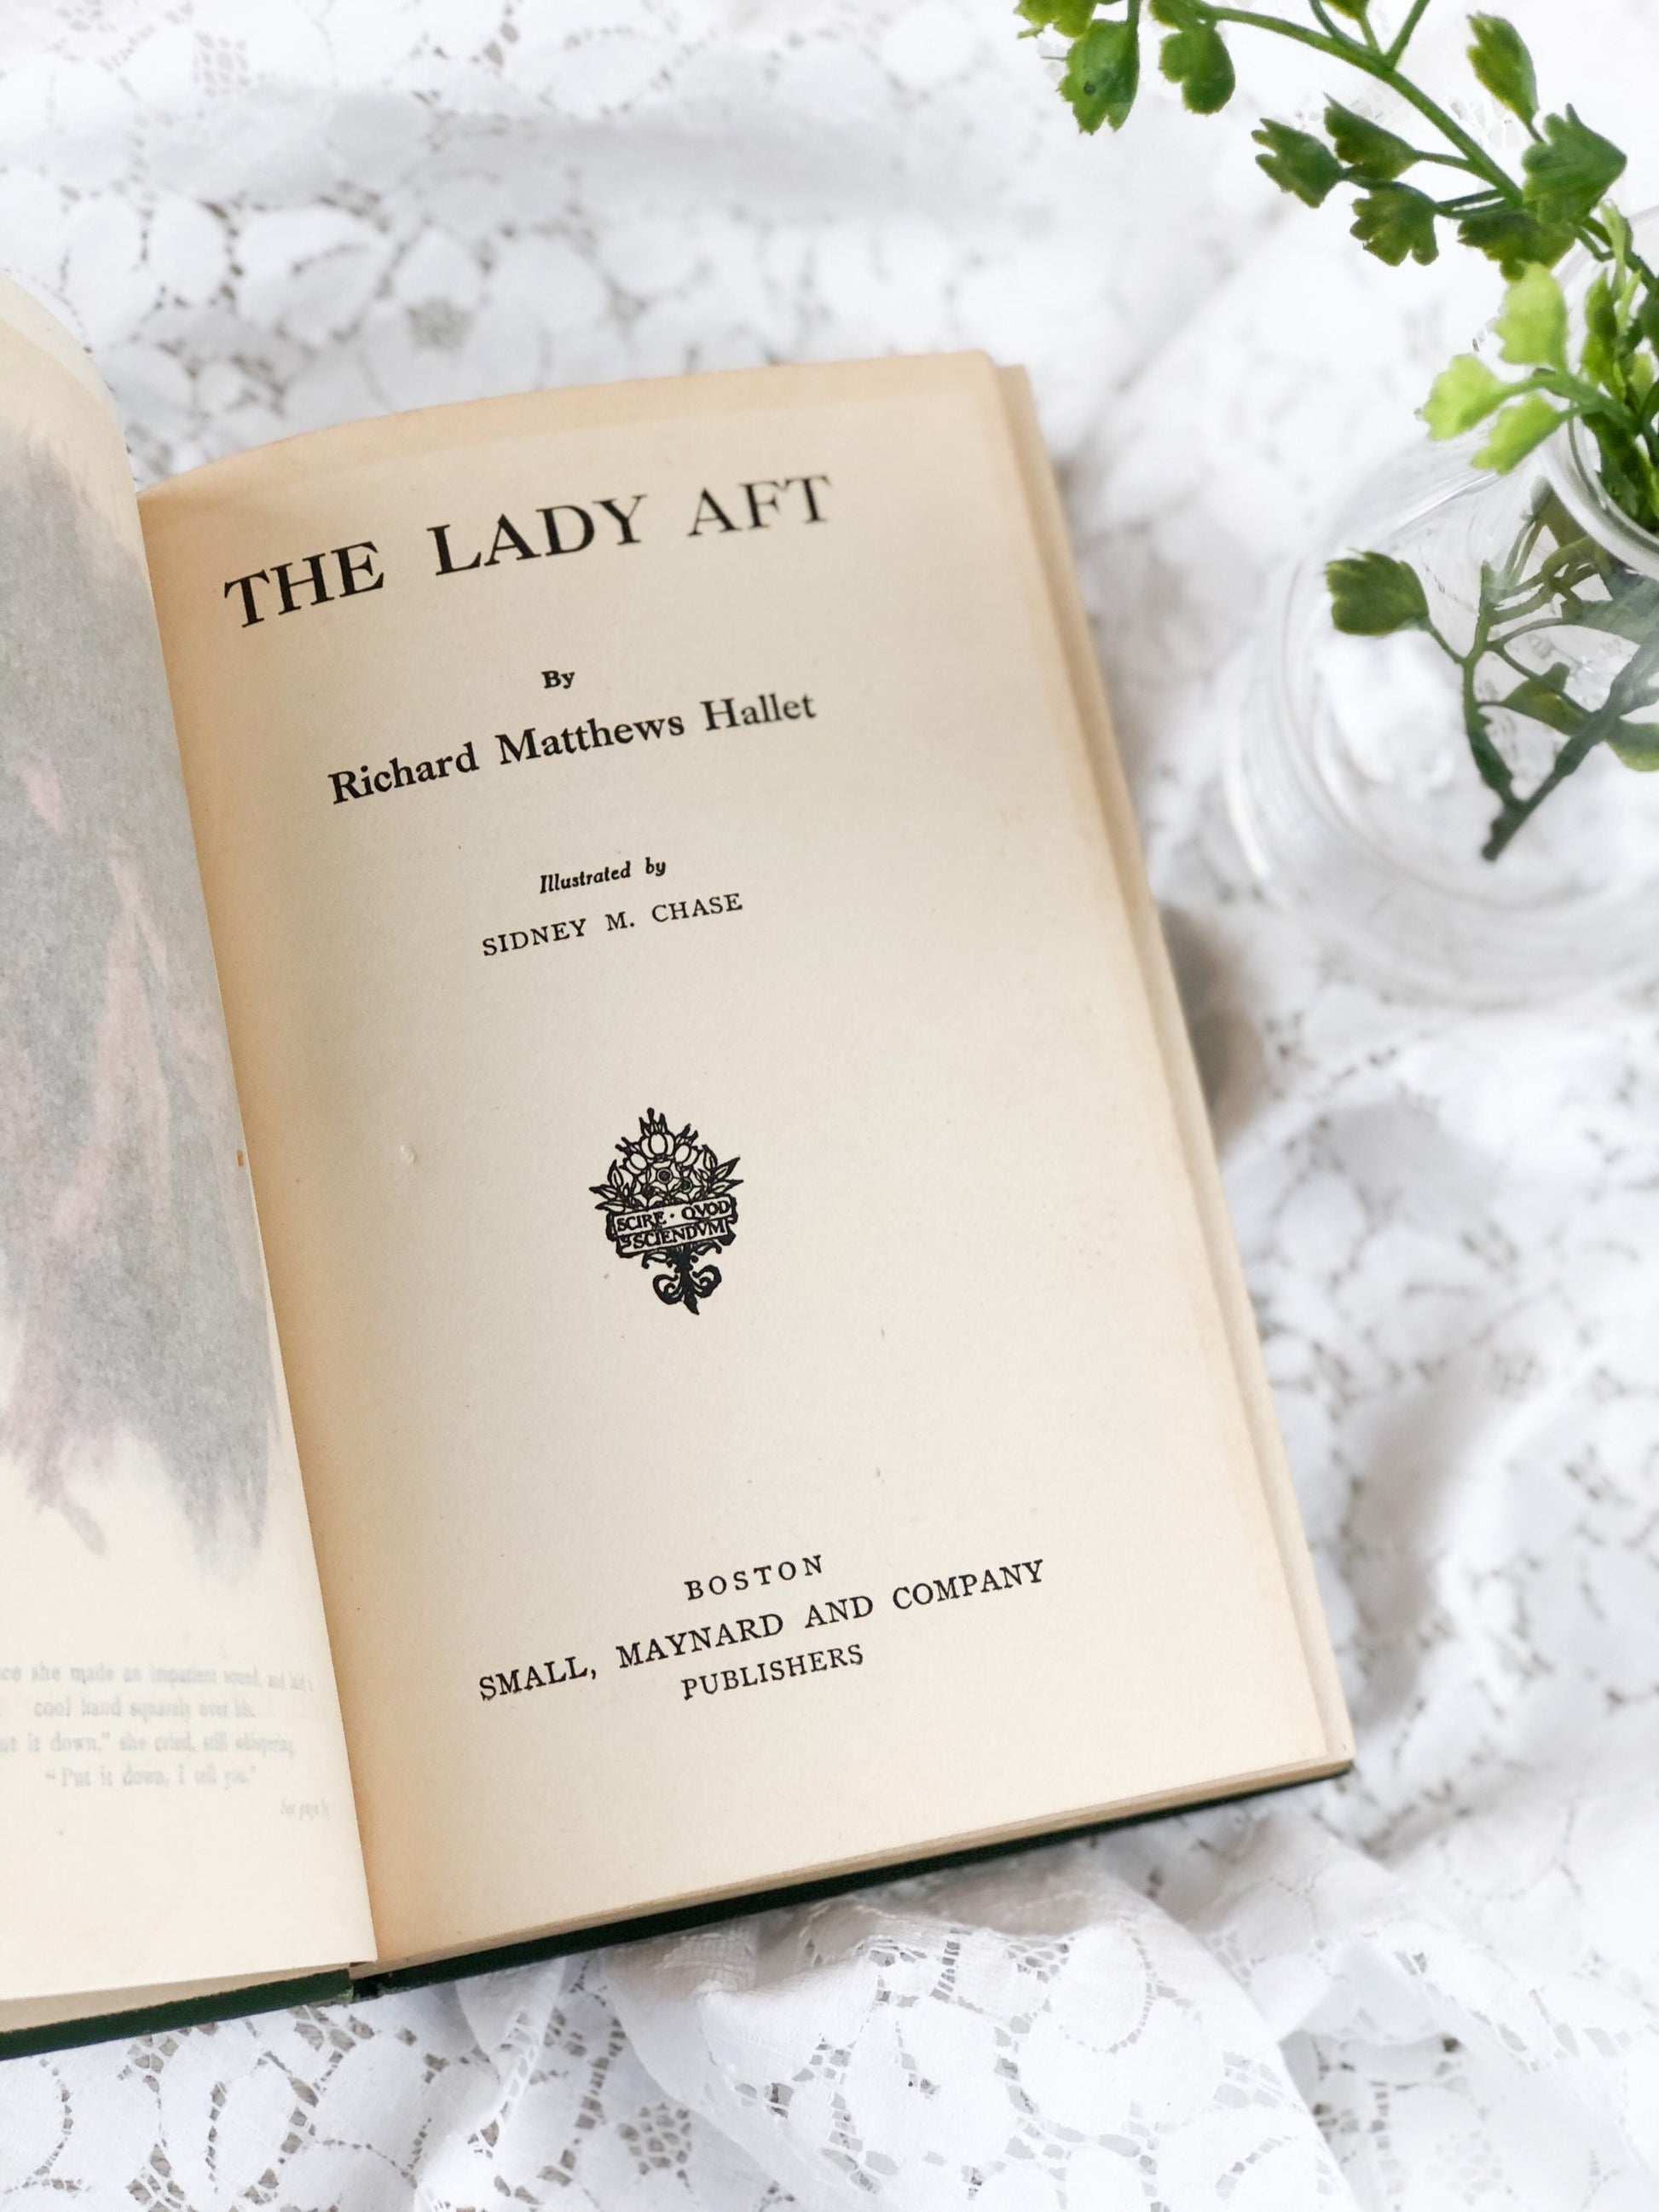 Rare Book, The Lady Aft